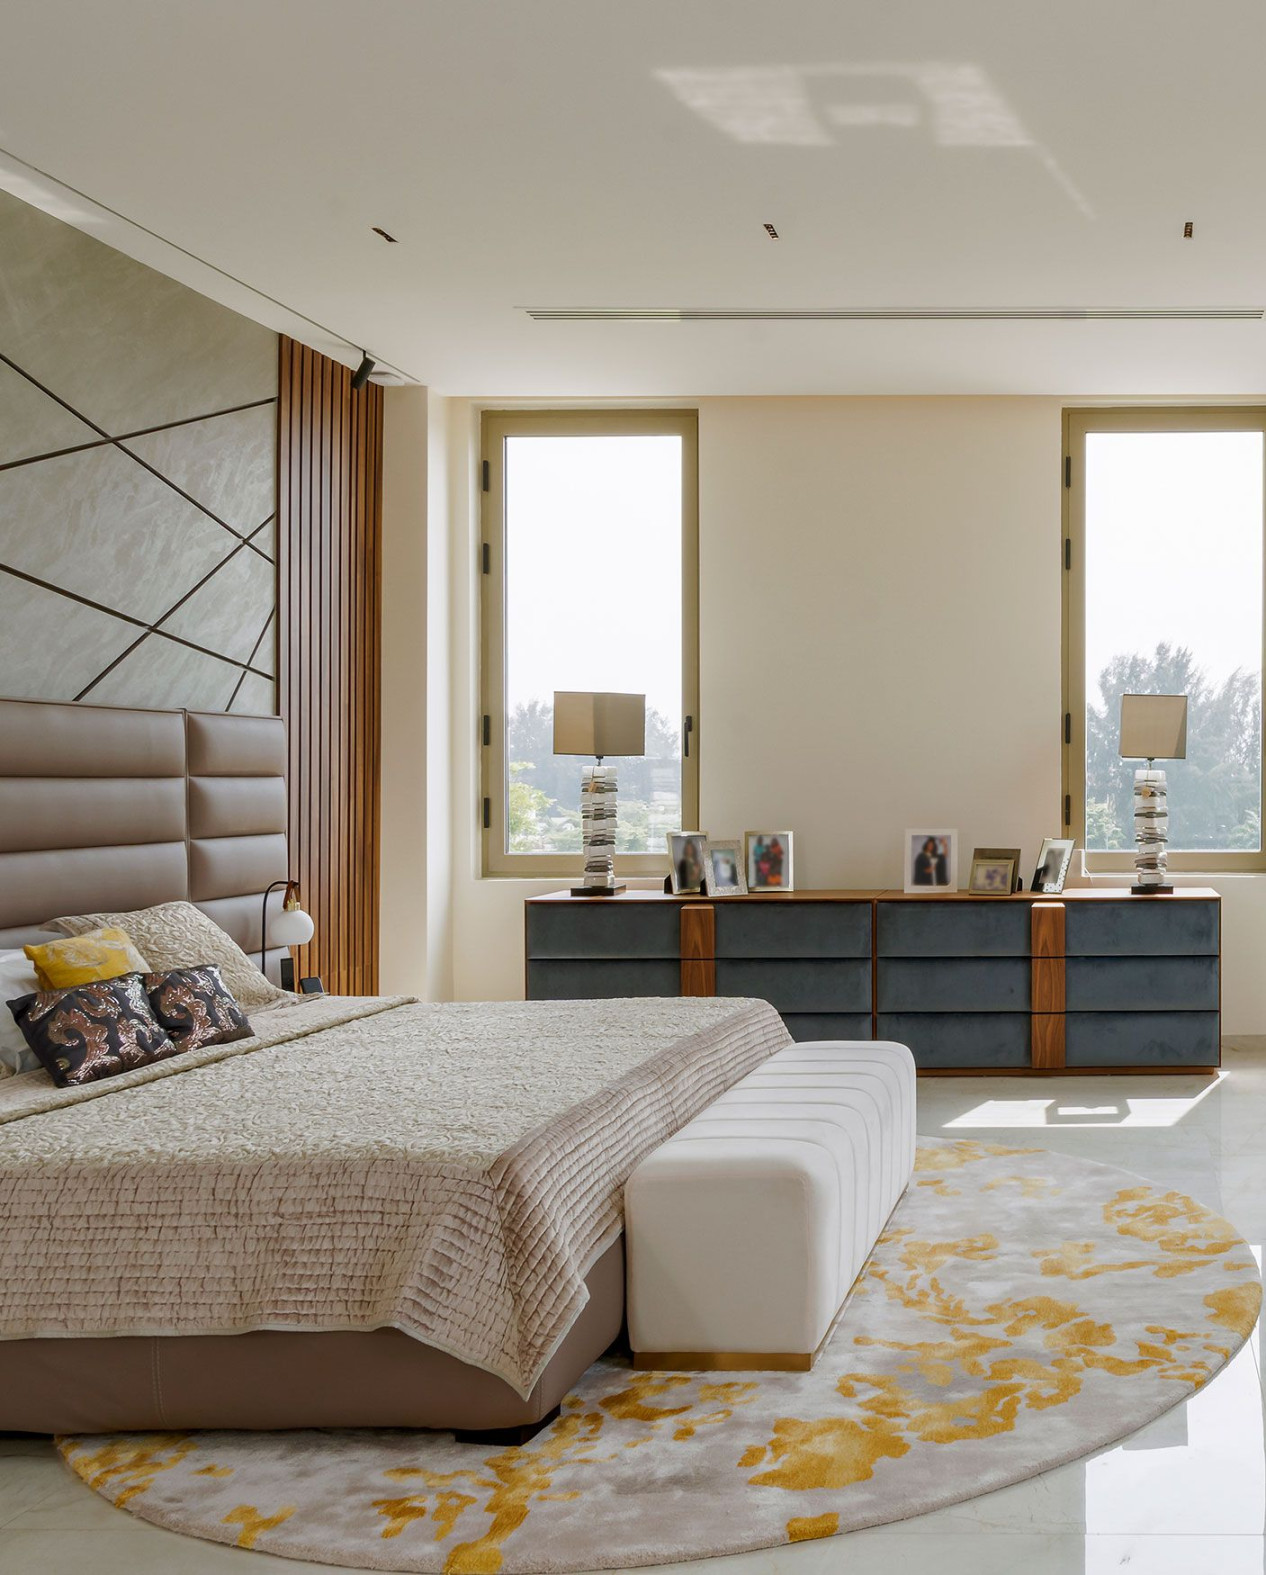 Inspiring Modern Bedroom Ideas - Best Modern Bedroom Designs